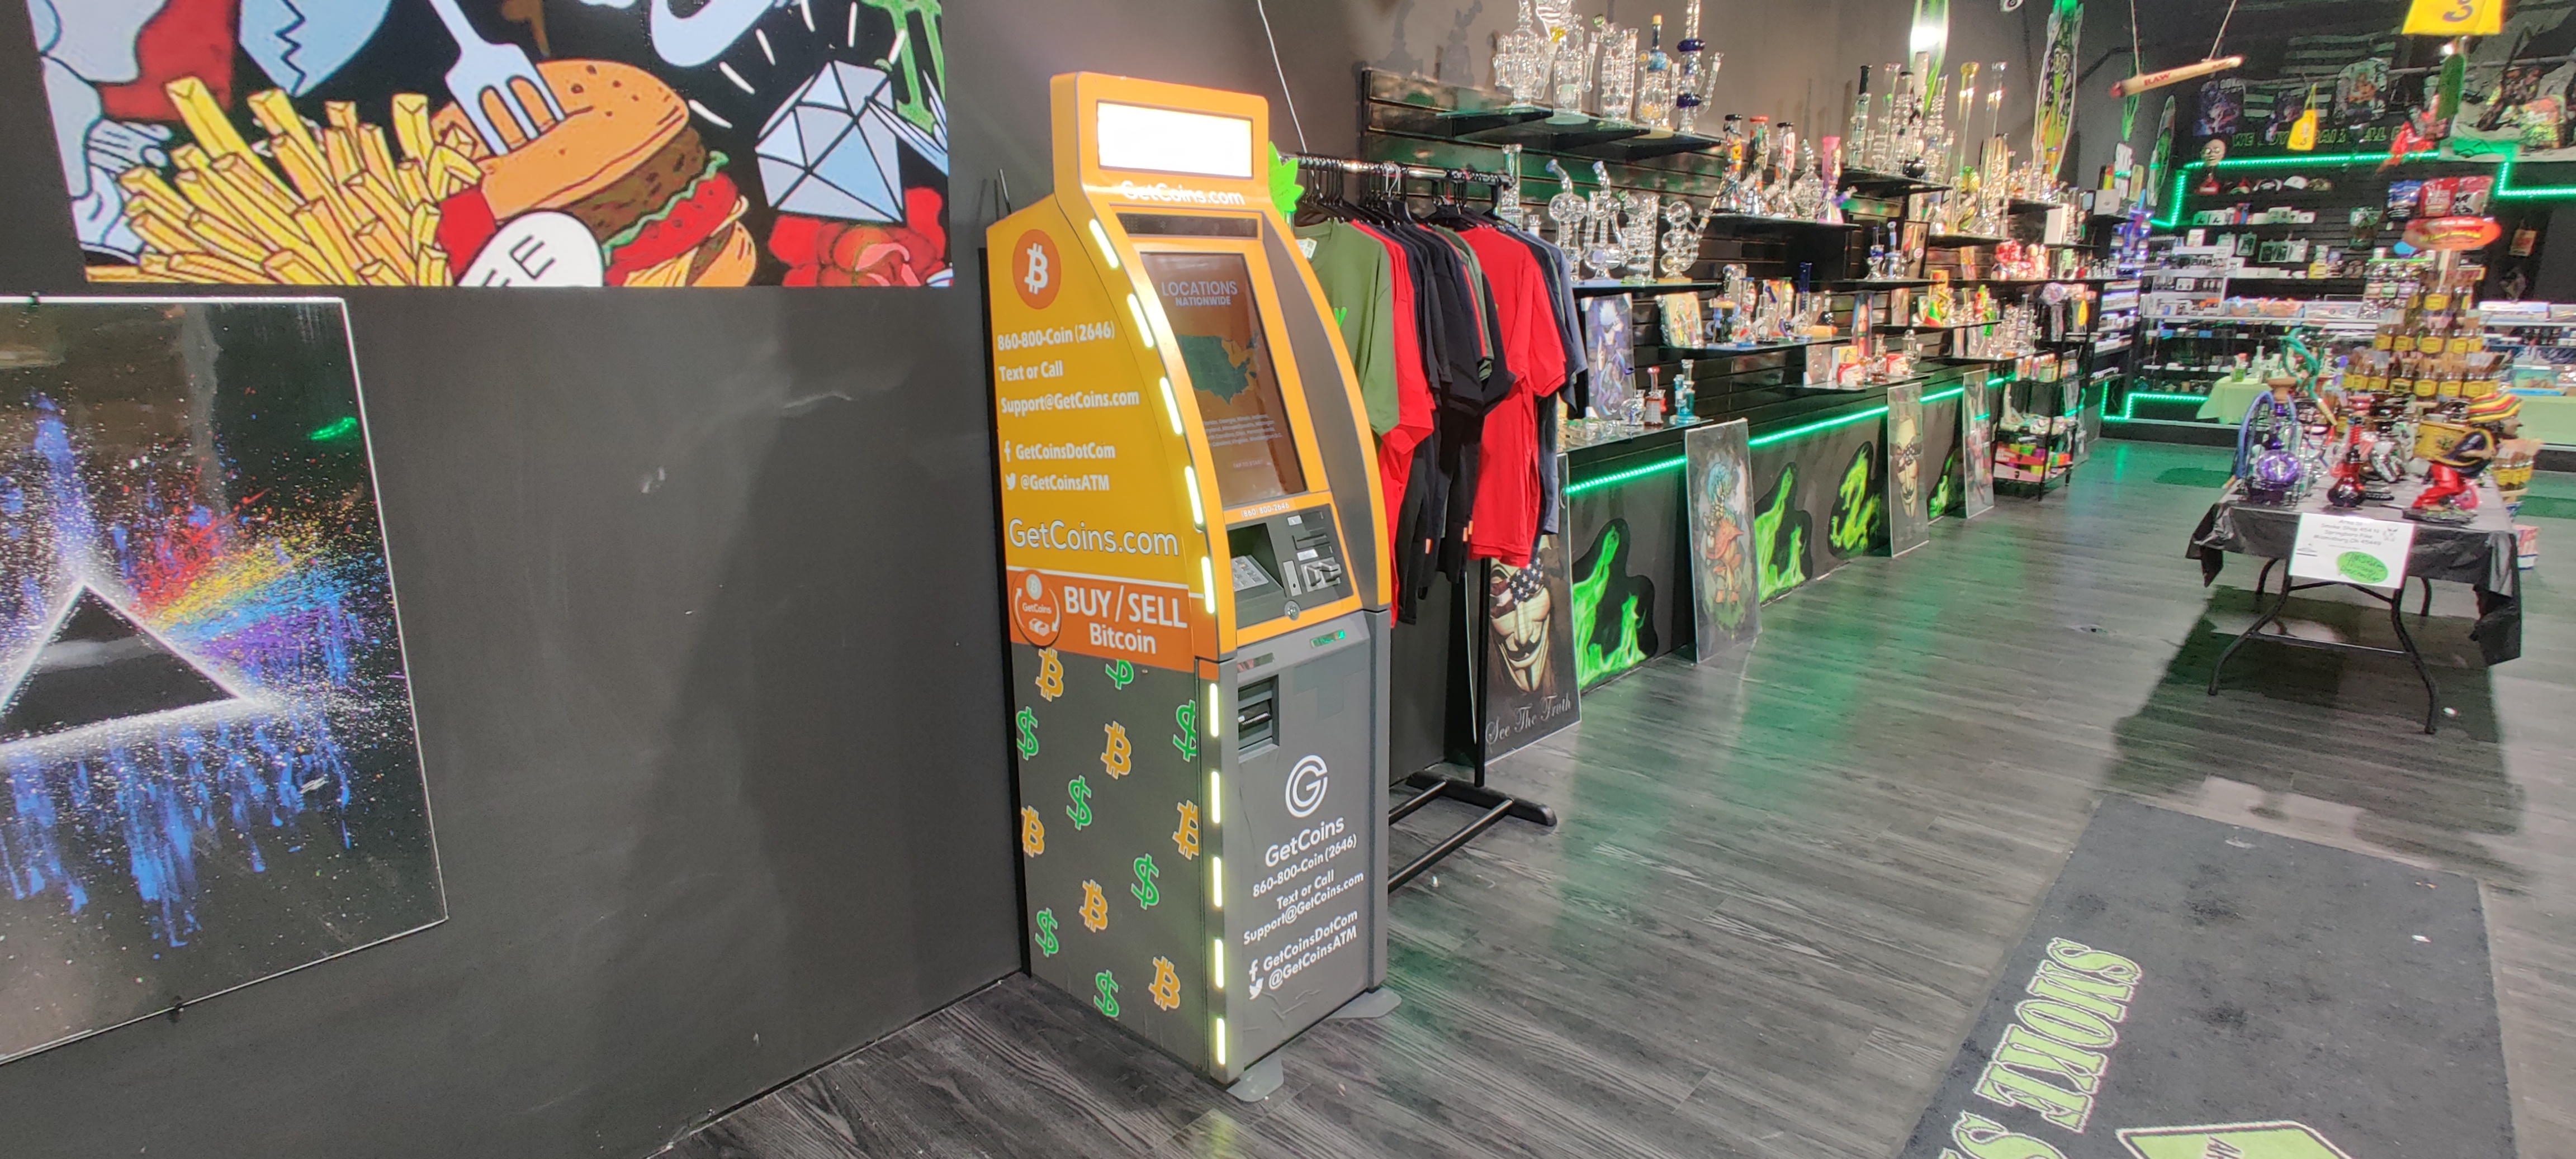 Getcoins - Bitcoin ATM - Inside of Area 51 Smoke Shop in Dayton, Ohio